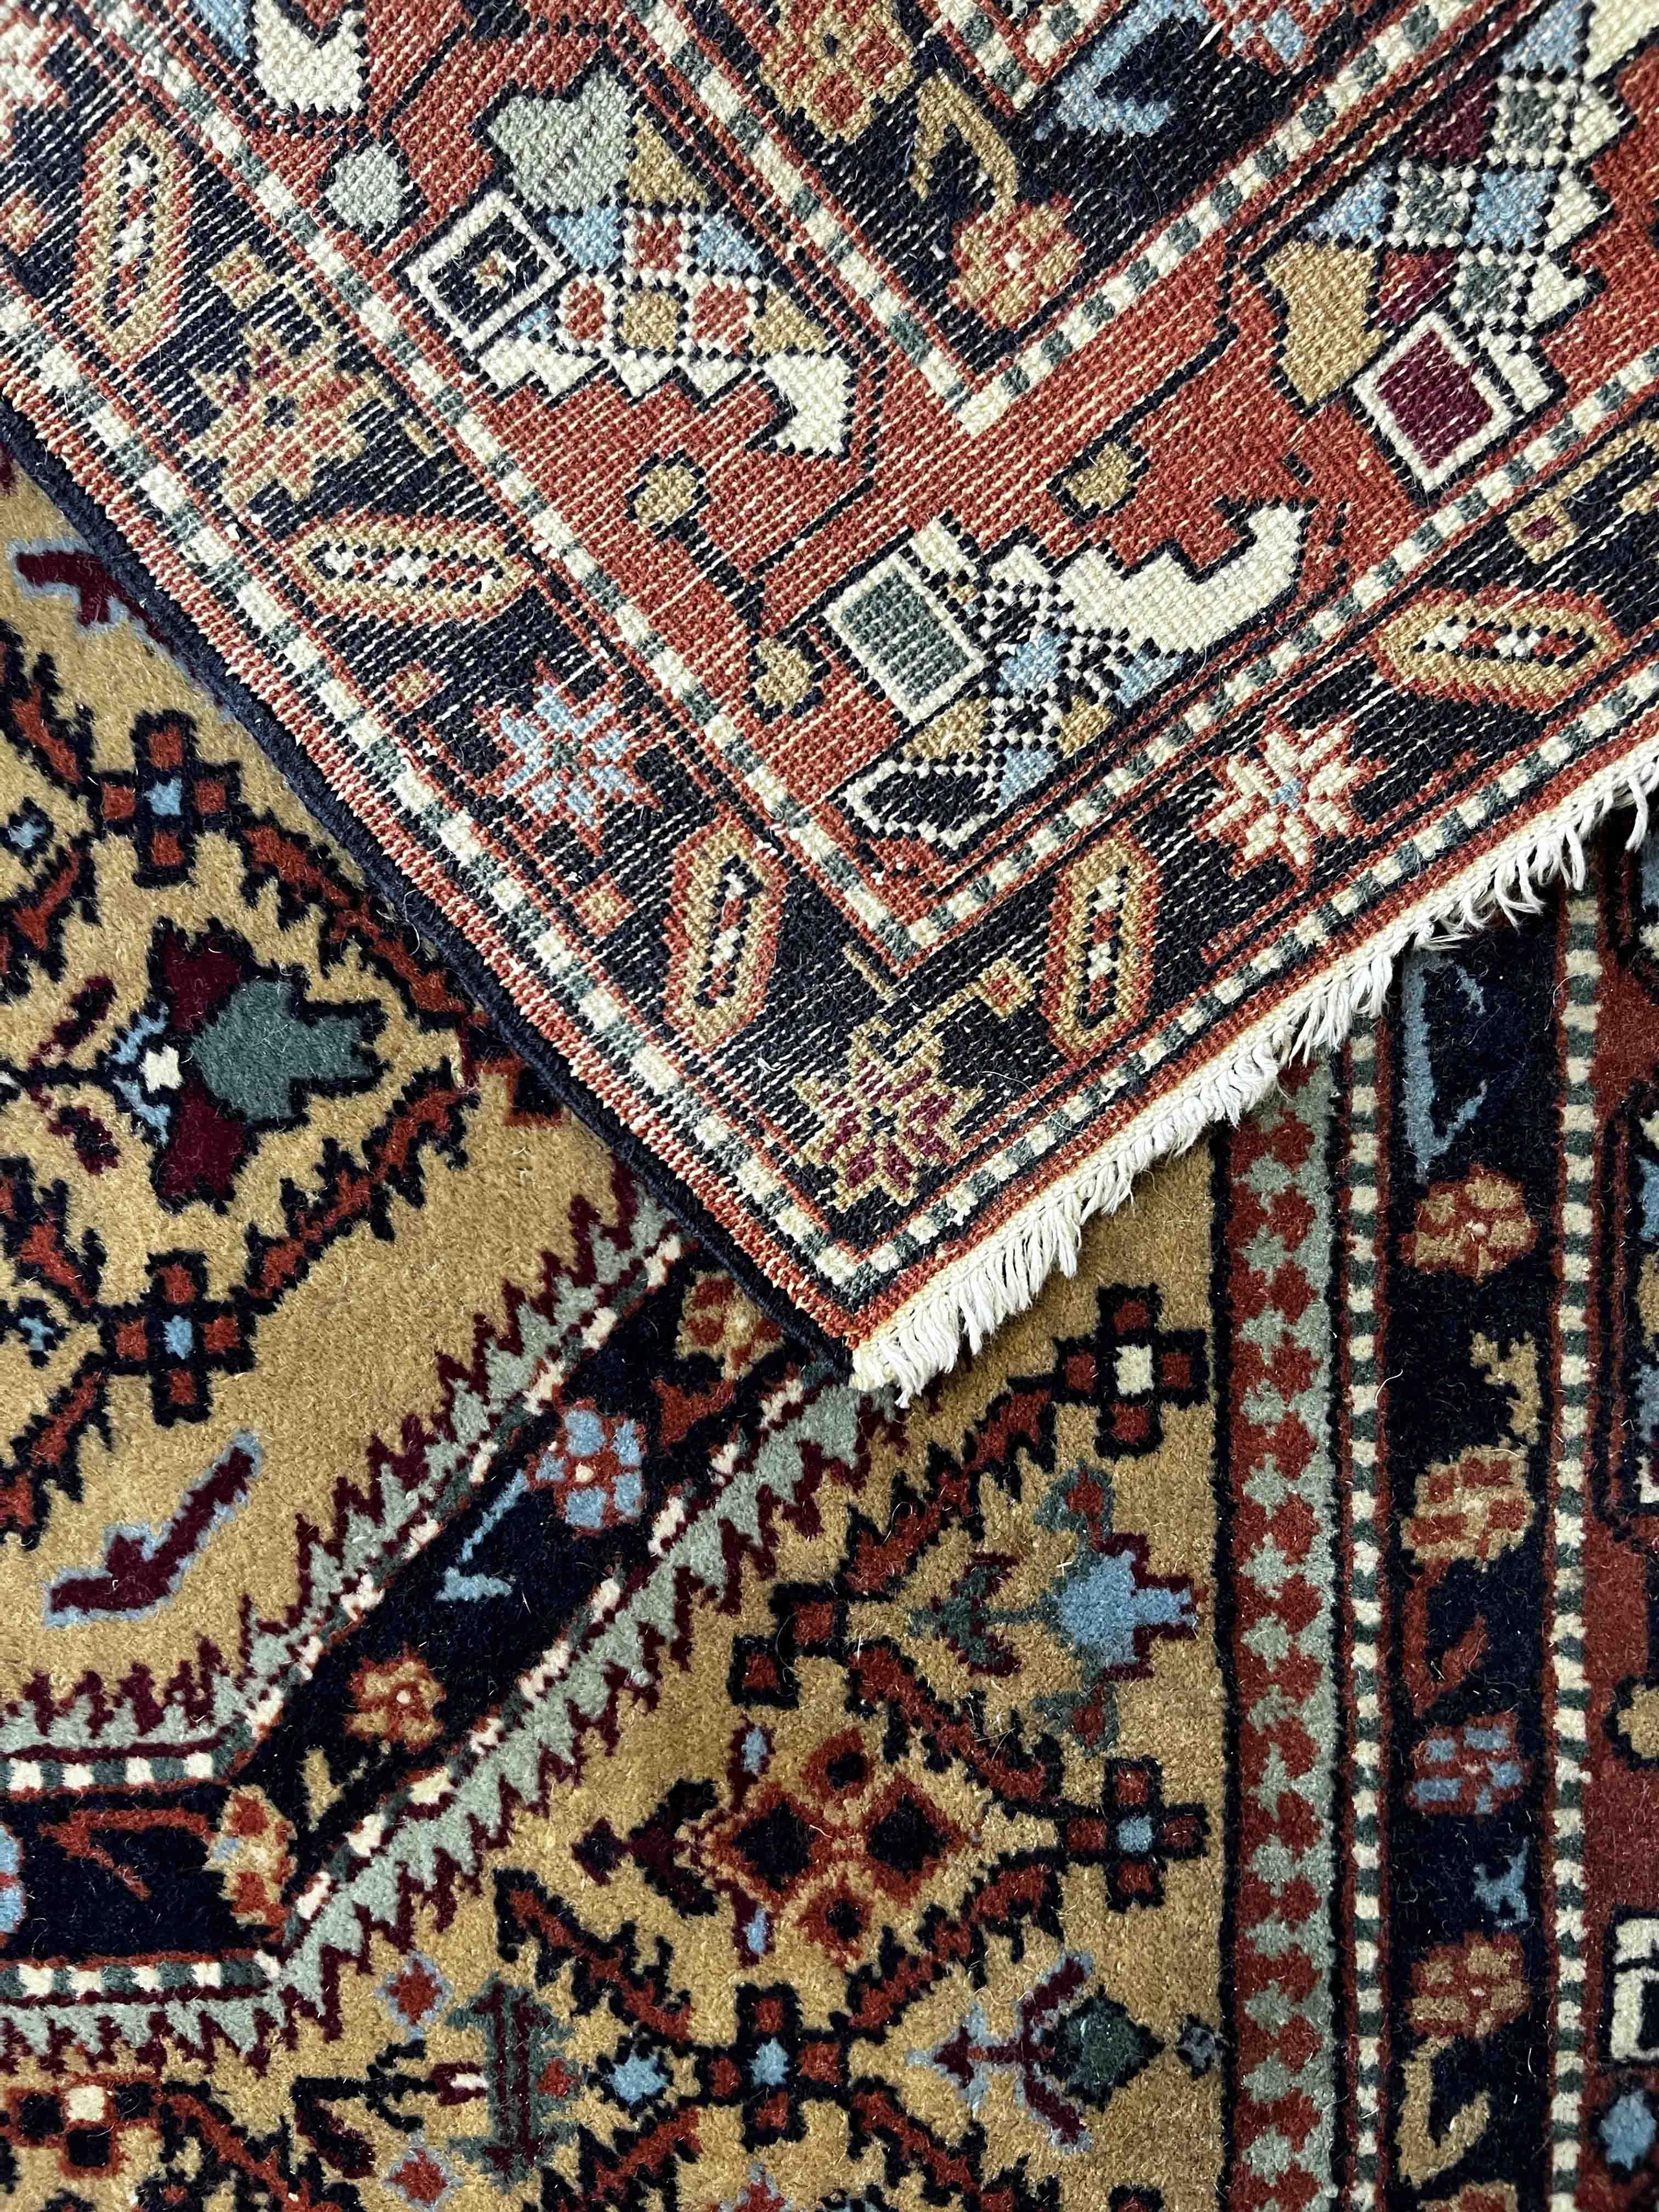  Caucasian Chirvan Carpet, 19th Century - N° 730 For Sale 5